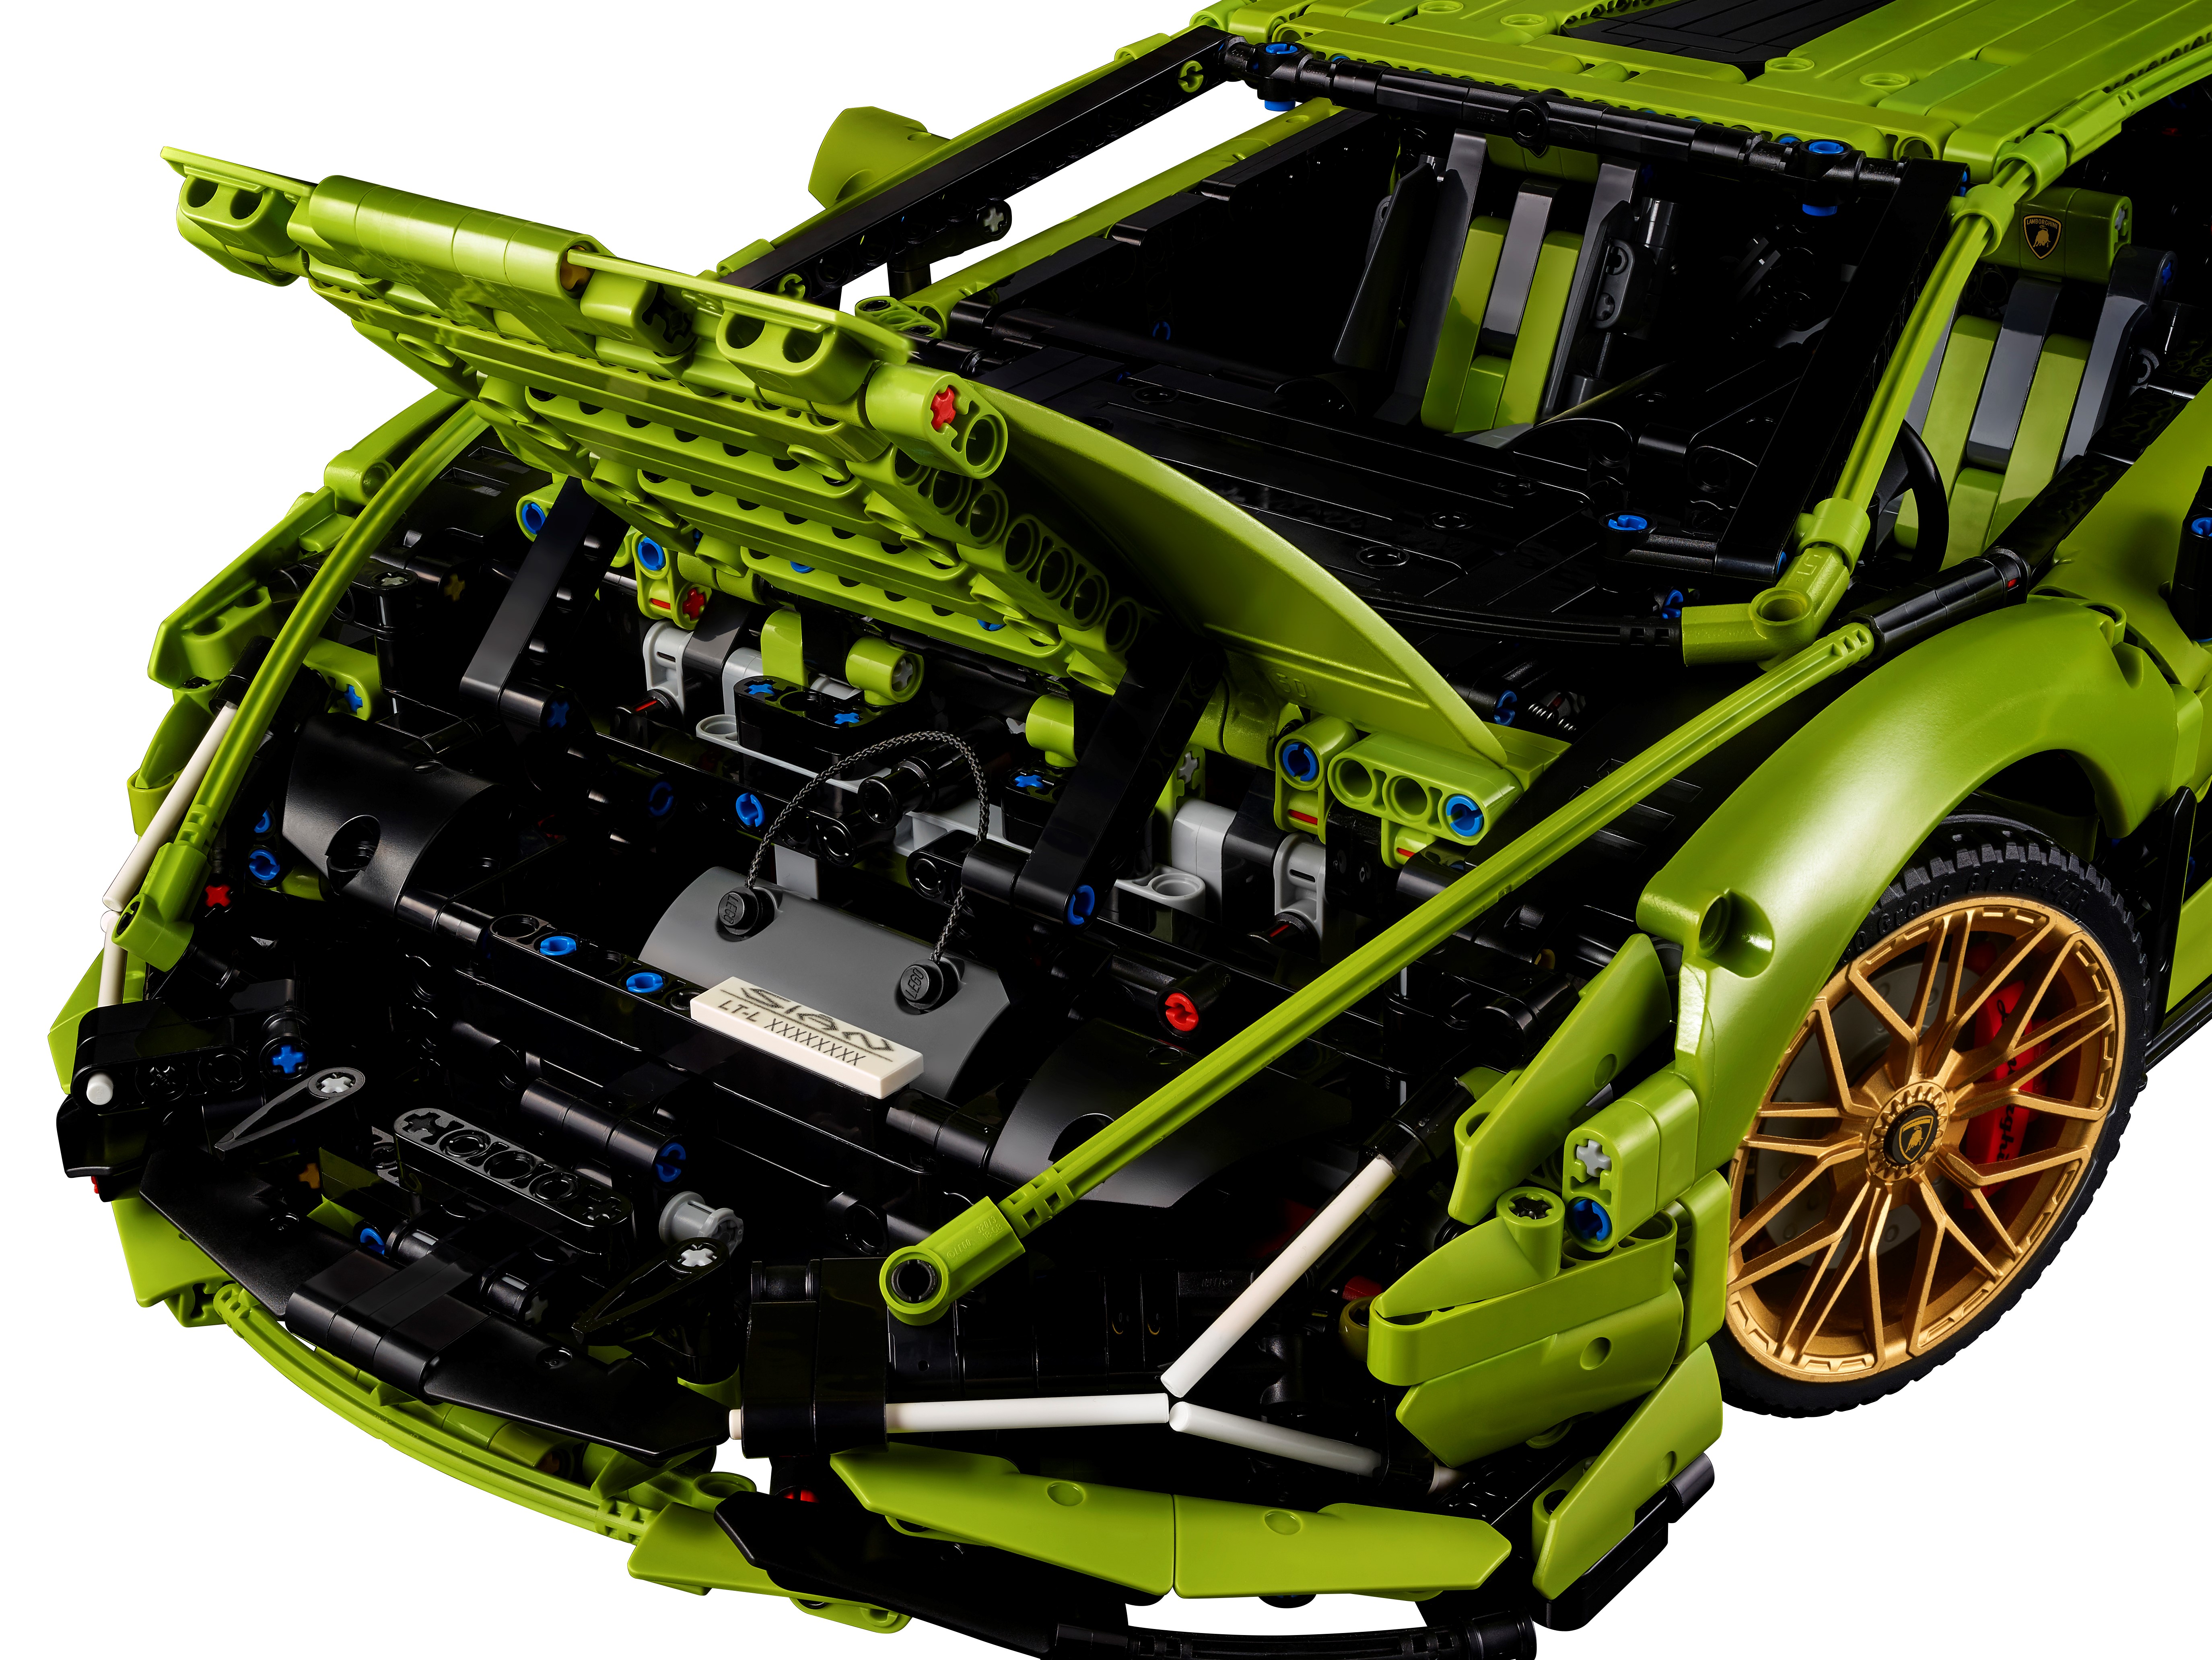 LEGO Technic 42115 Lamborghini Sian FKP 37 is LEGO's next drool